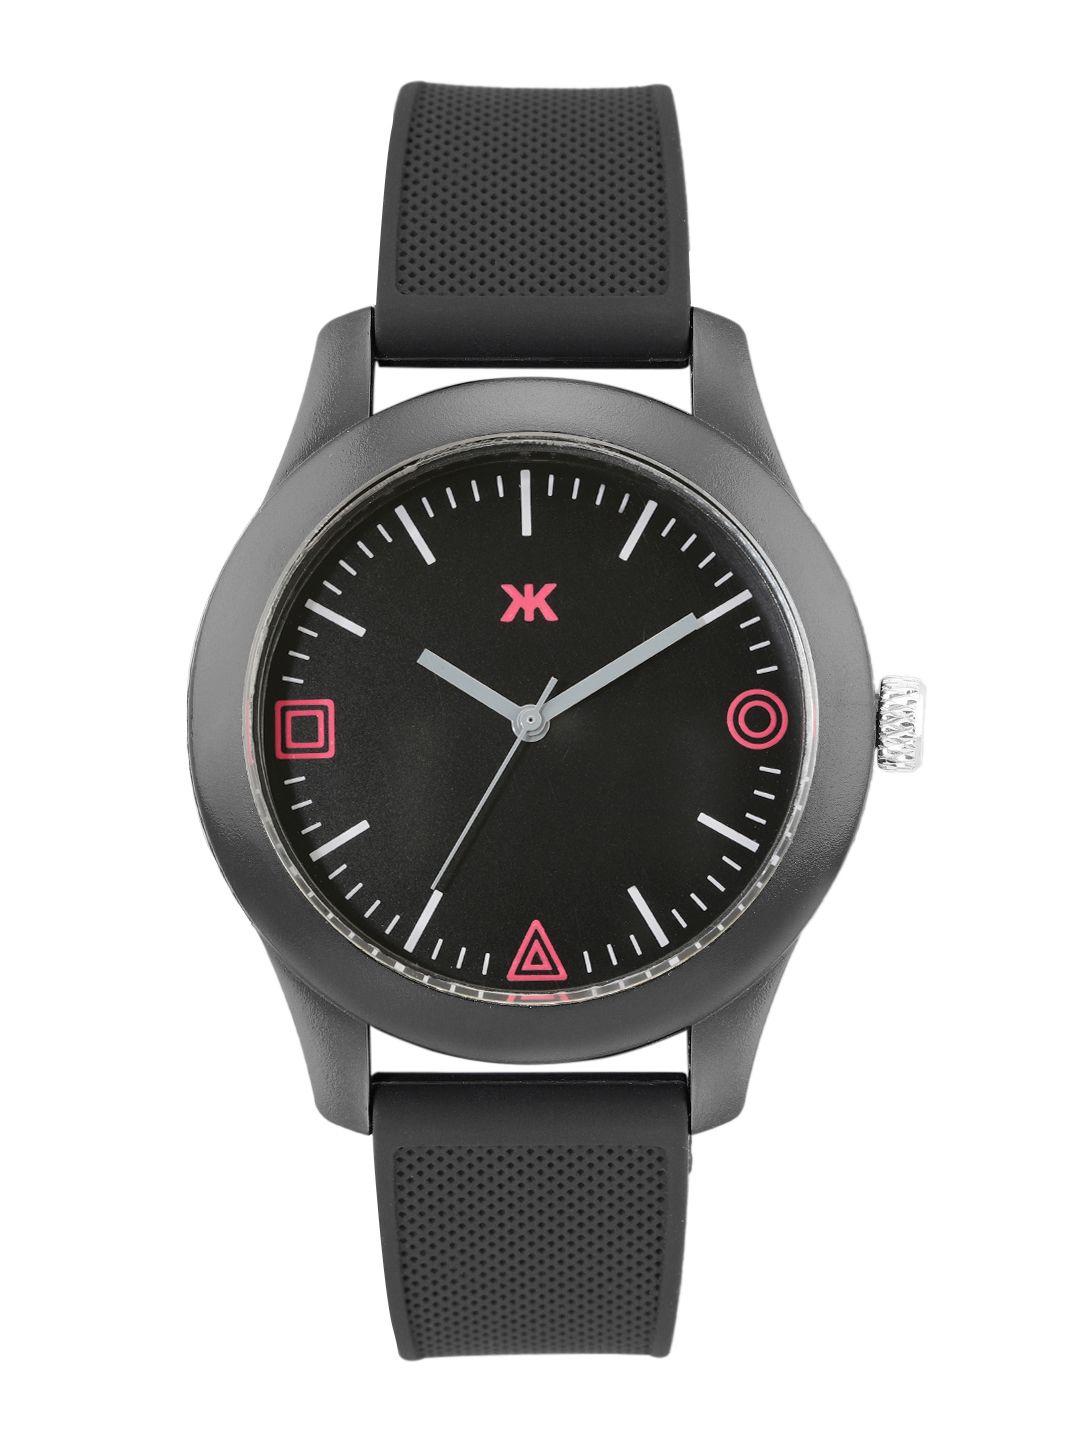 kook n keech unisex black analogue watch knk22-5a